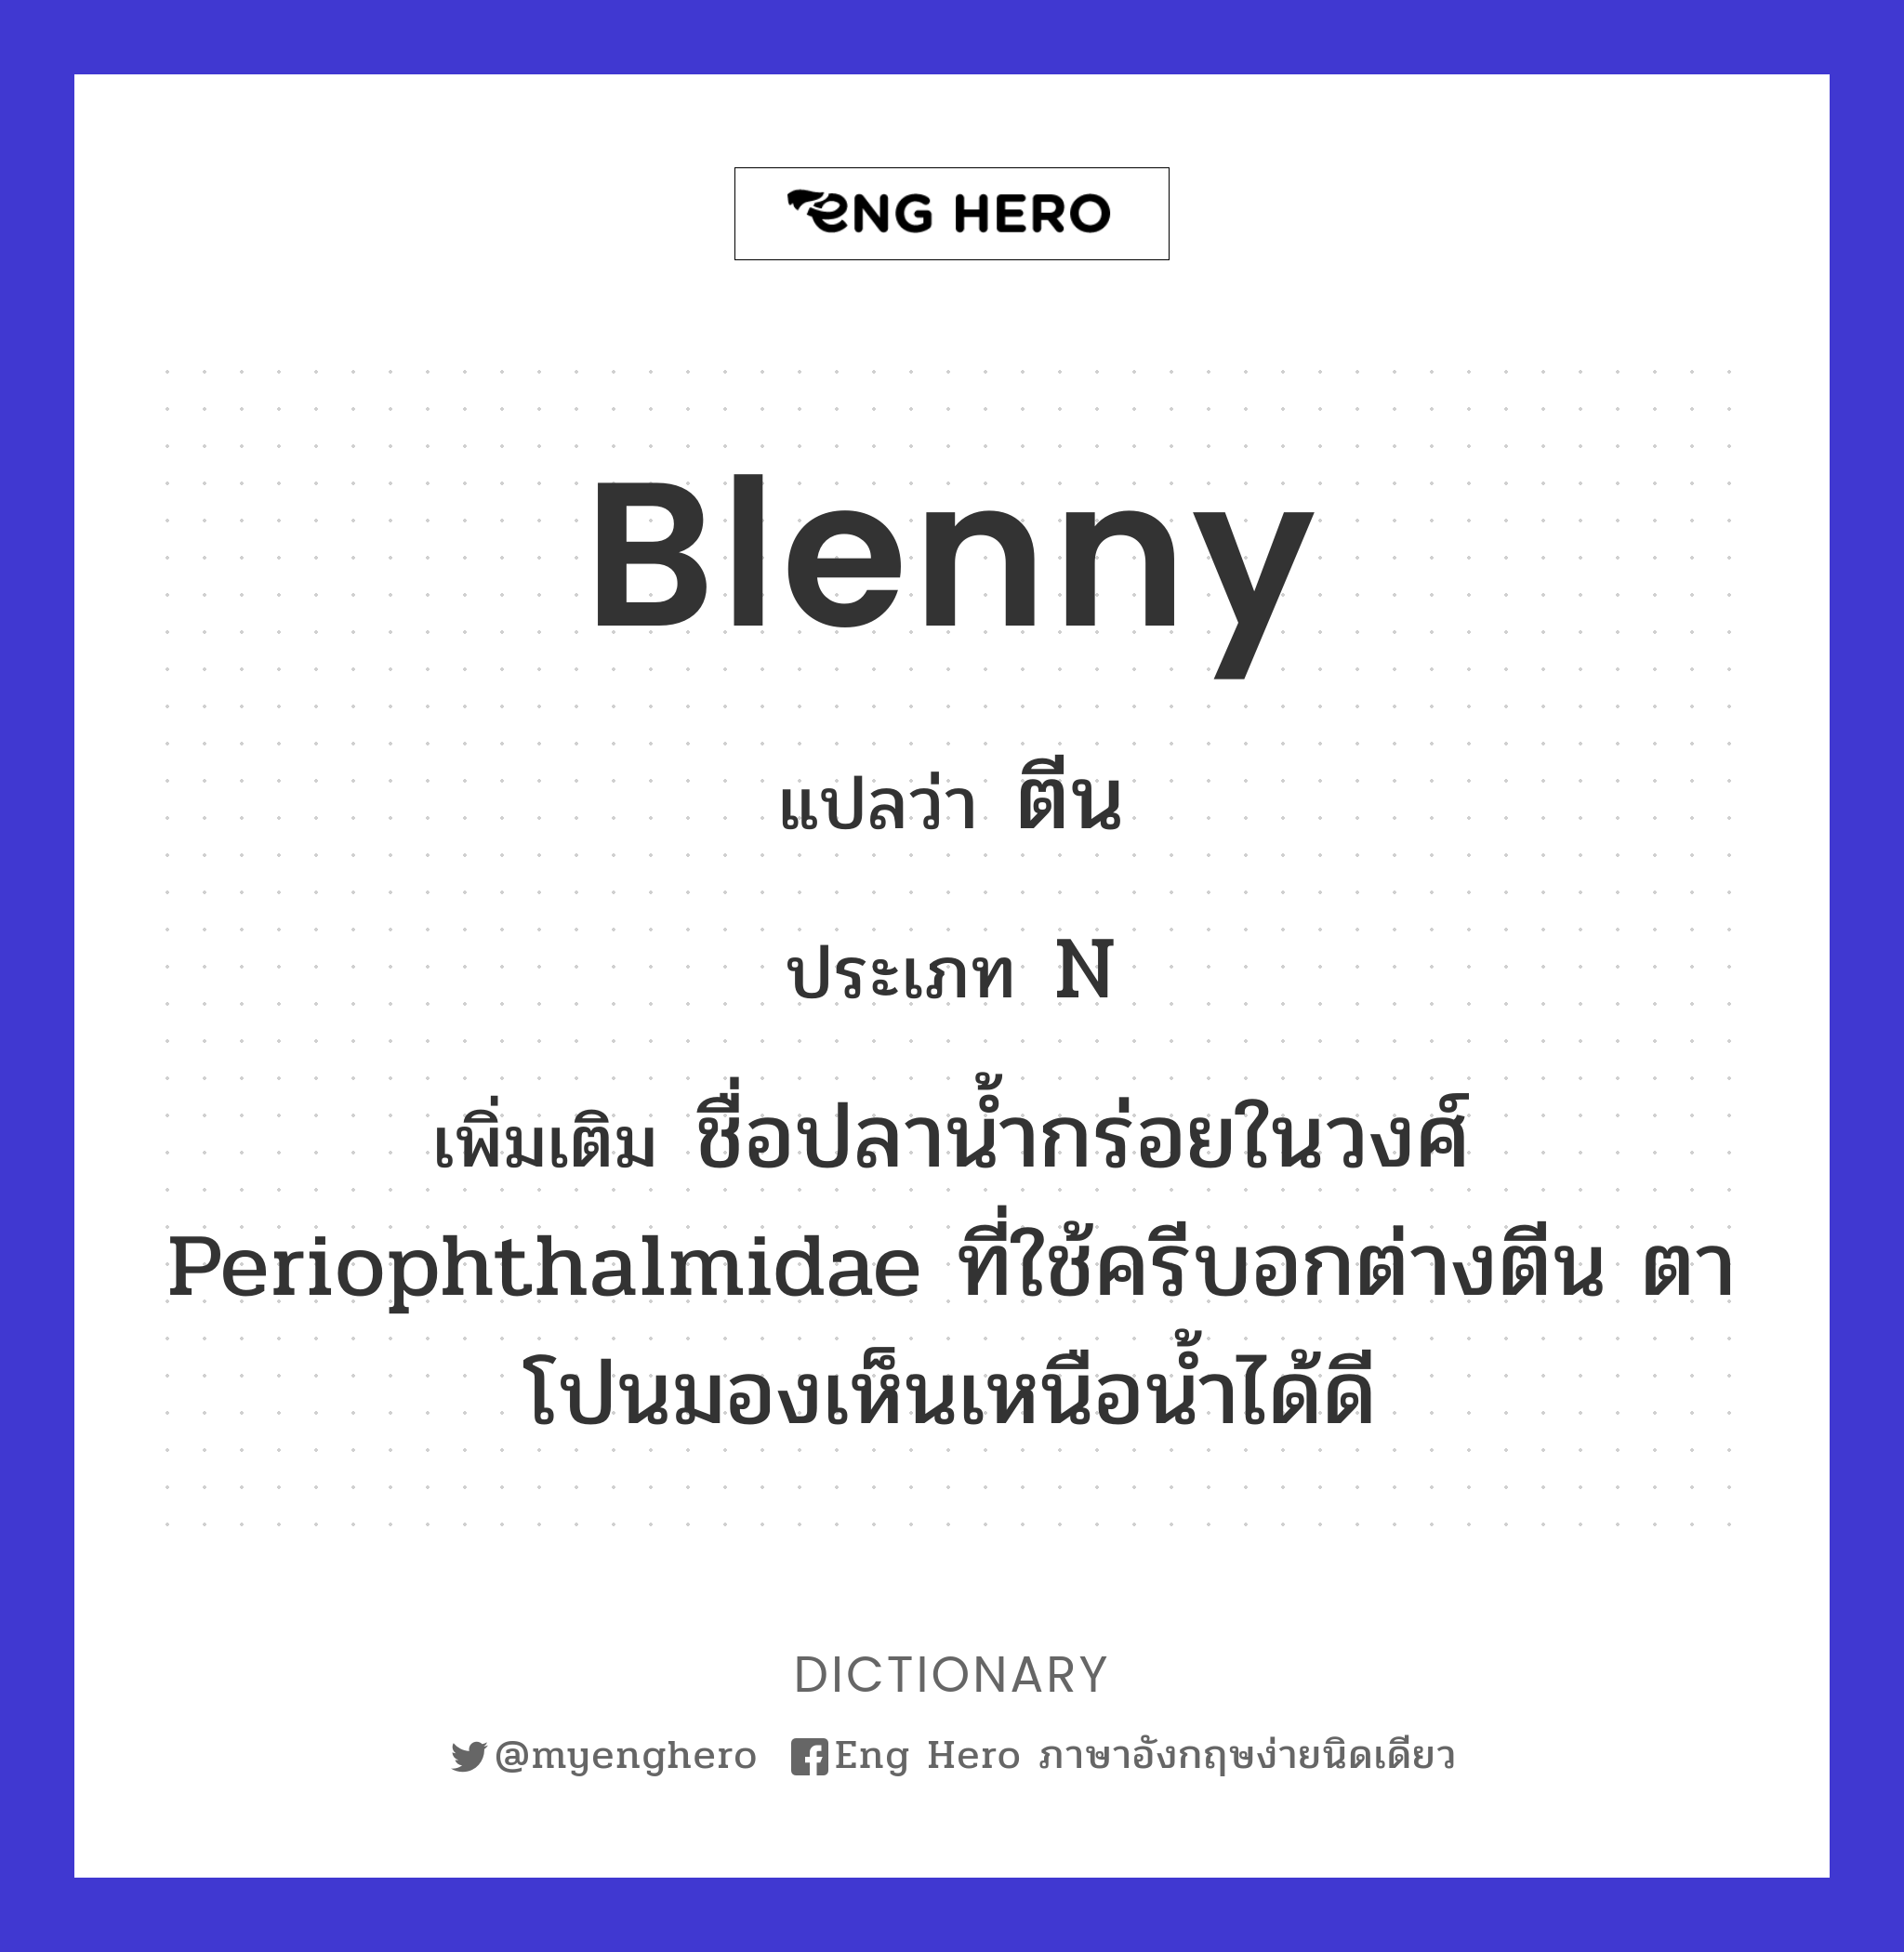 blenny